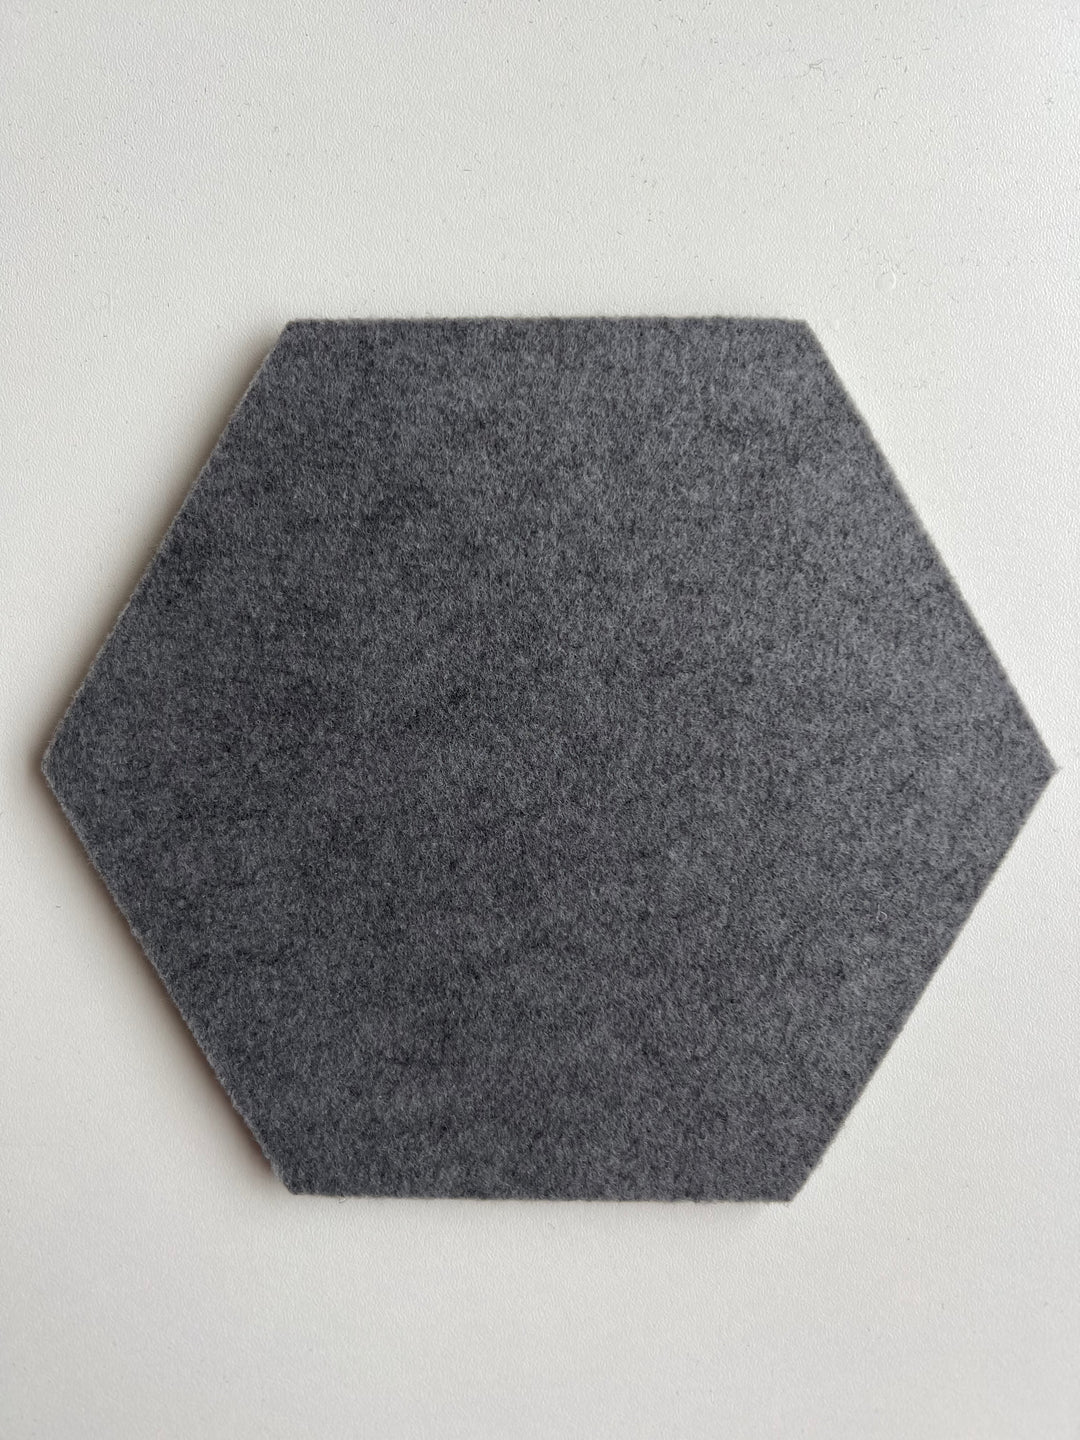 Hexagonal cell pin board